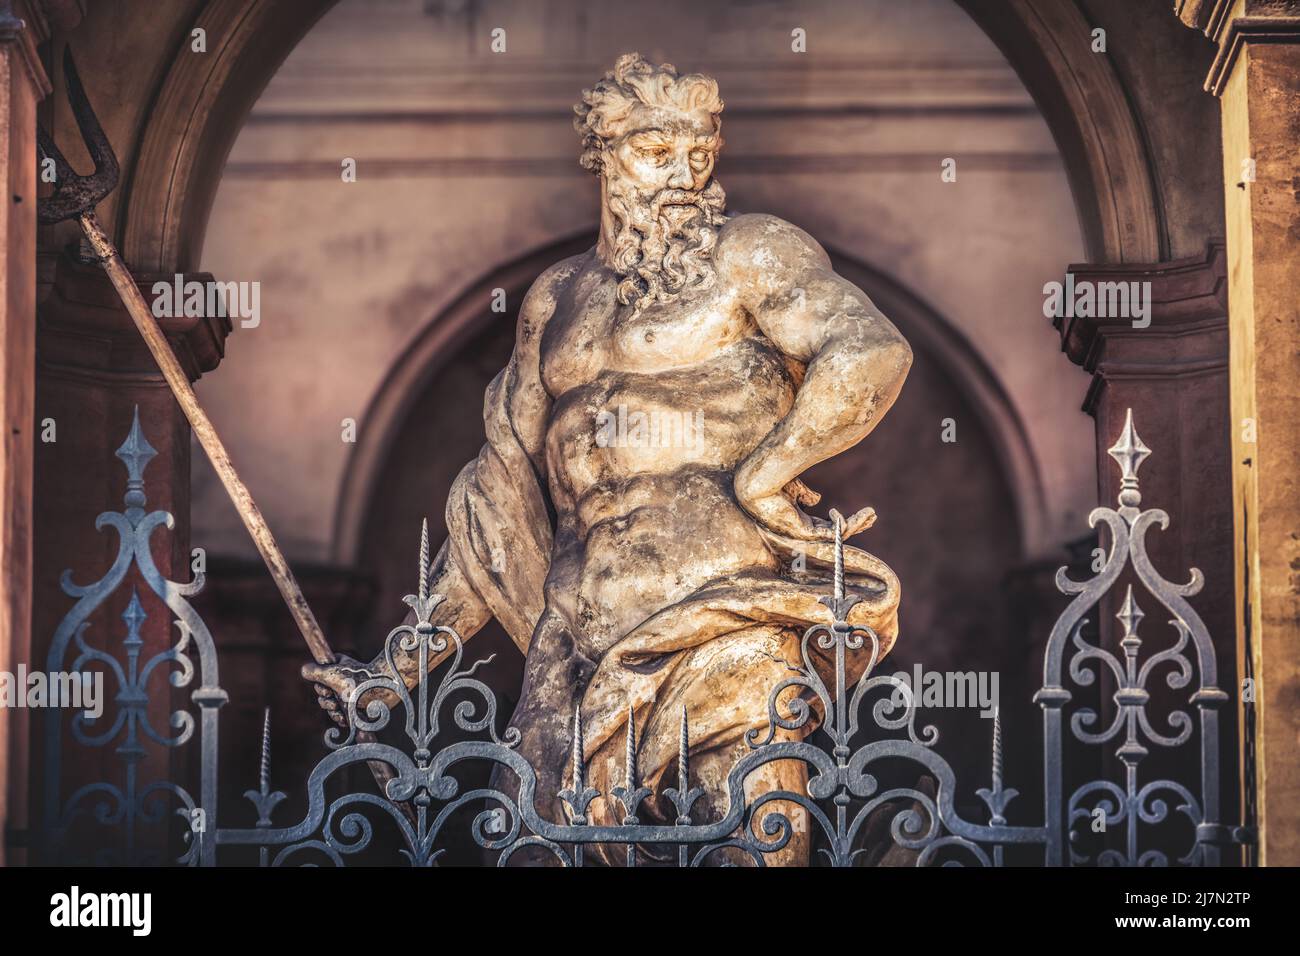 Poseidon statue greek roman god Neptune spendid artwork photo book cover background Stock Photo